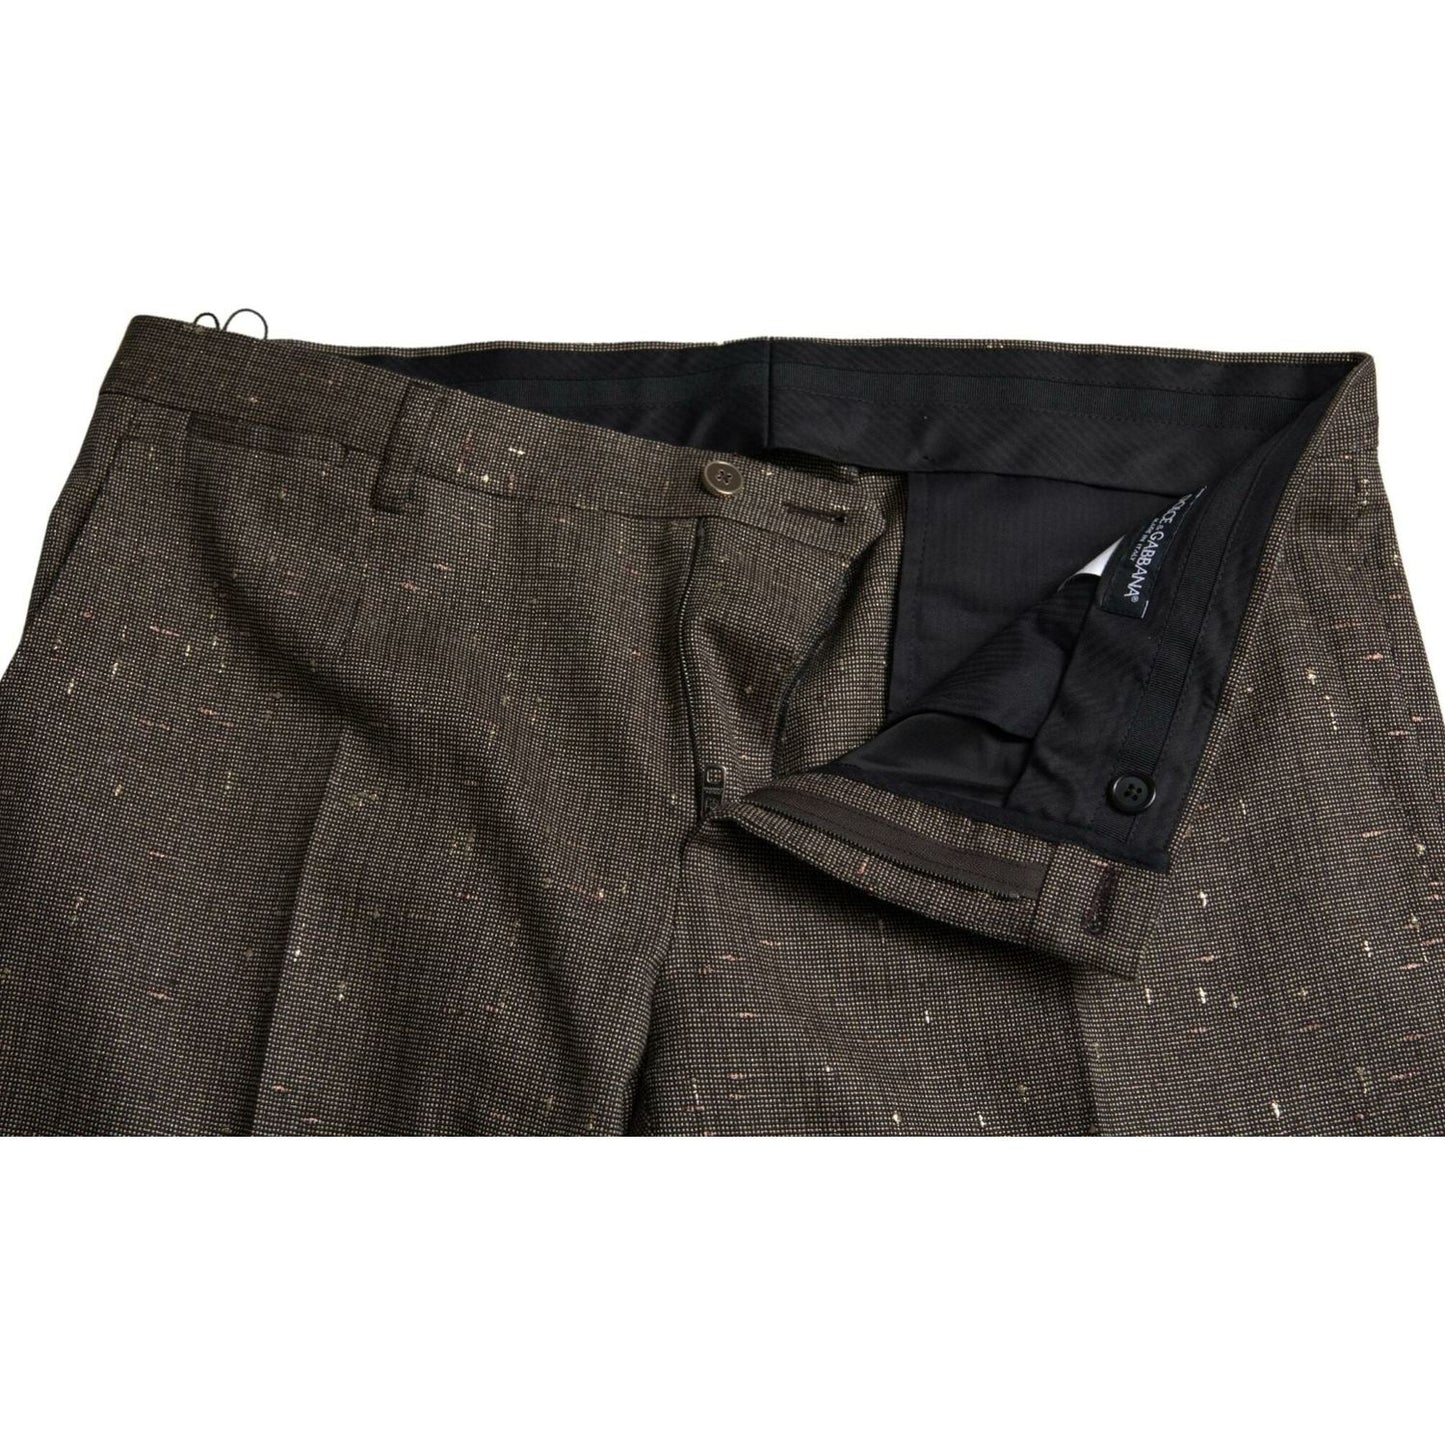 Dolce & Gabbana Elegant Skinny Wool Chino Pants brown-wool-dress-skinny-men-trouser-pants 465A9114bg-scaled-0aa475f7-b14.jpg